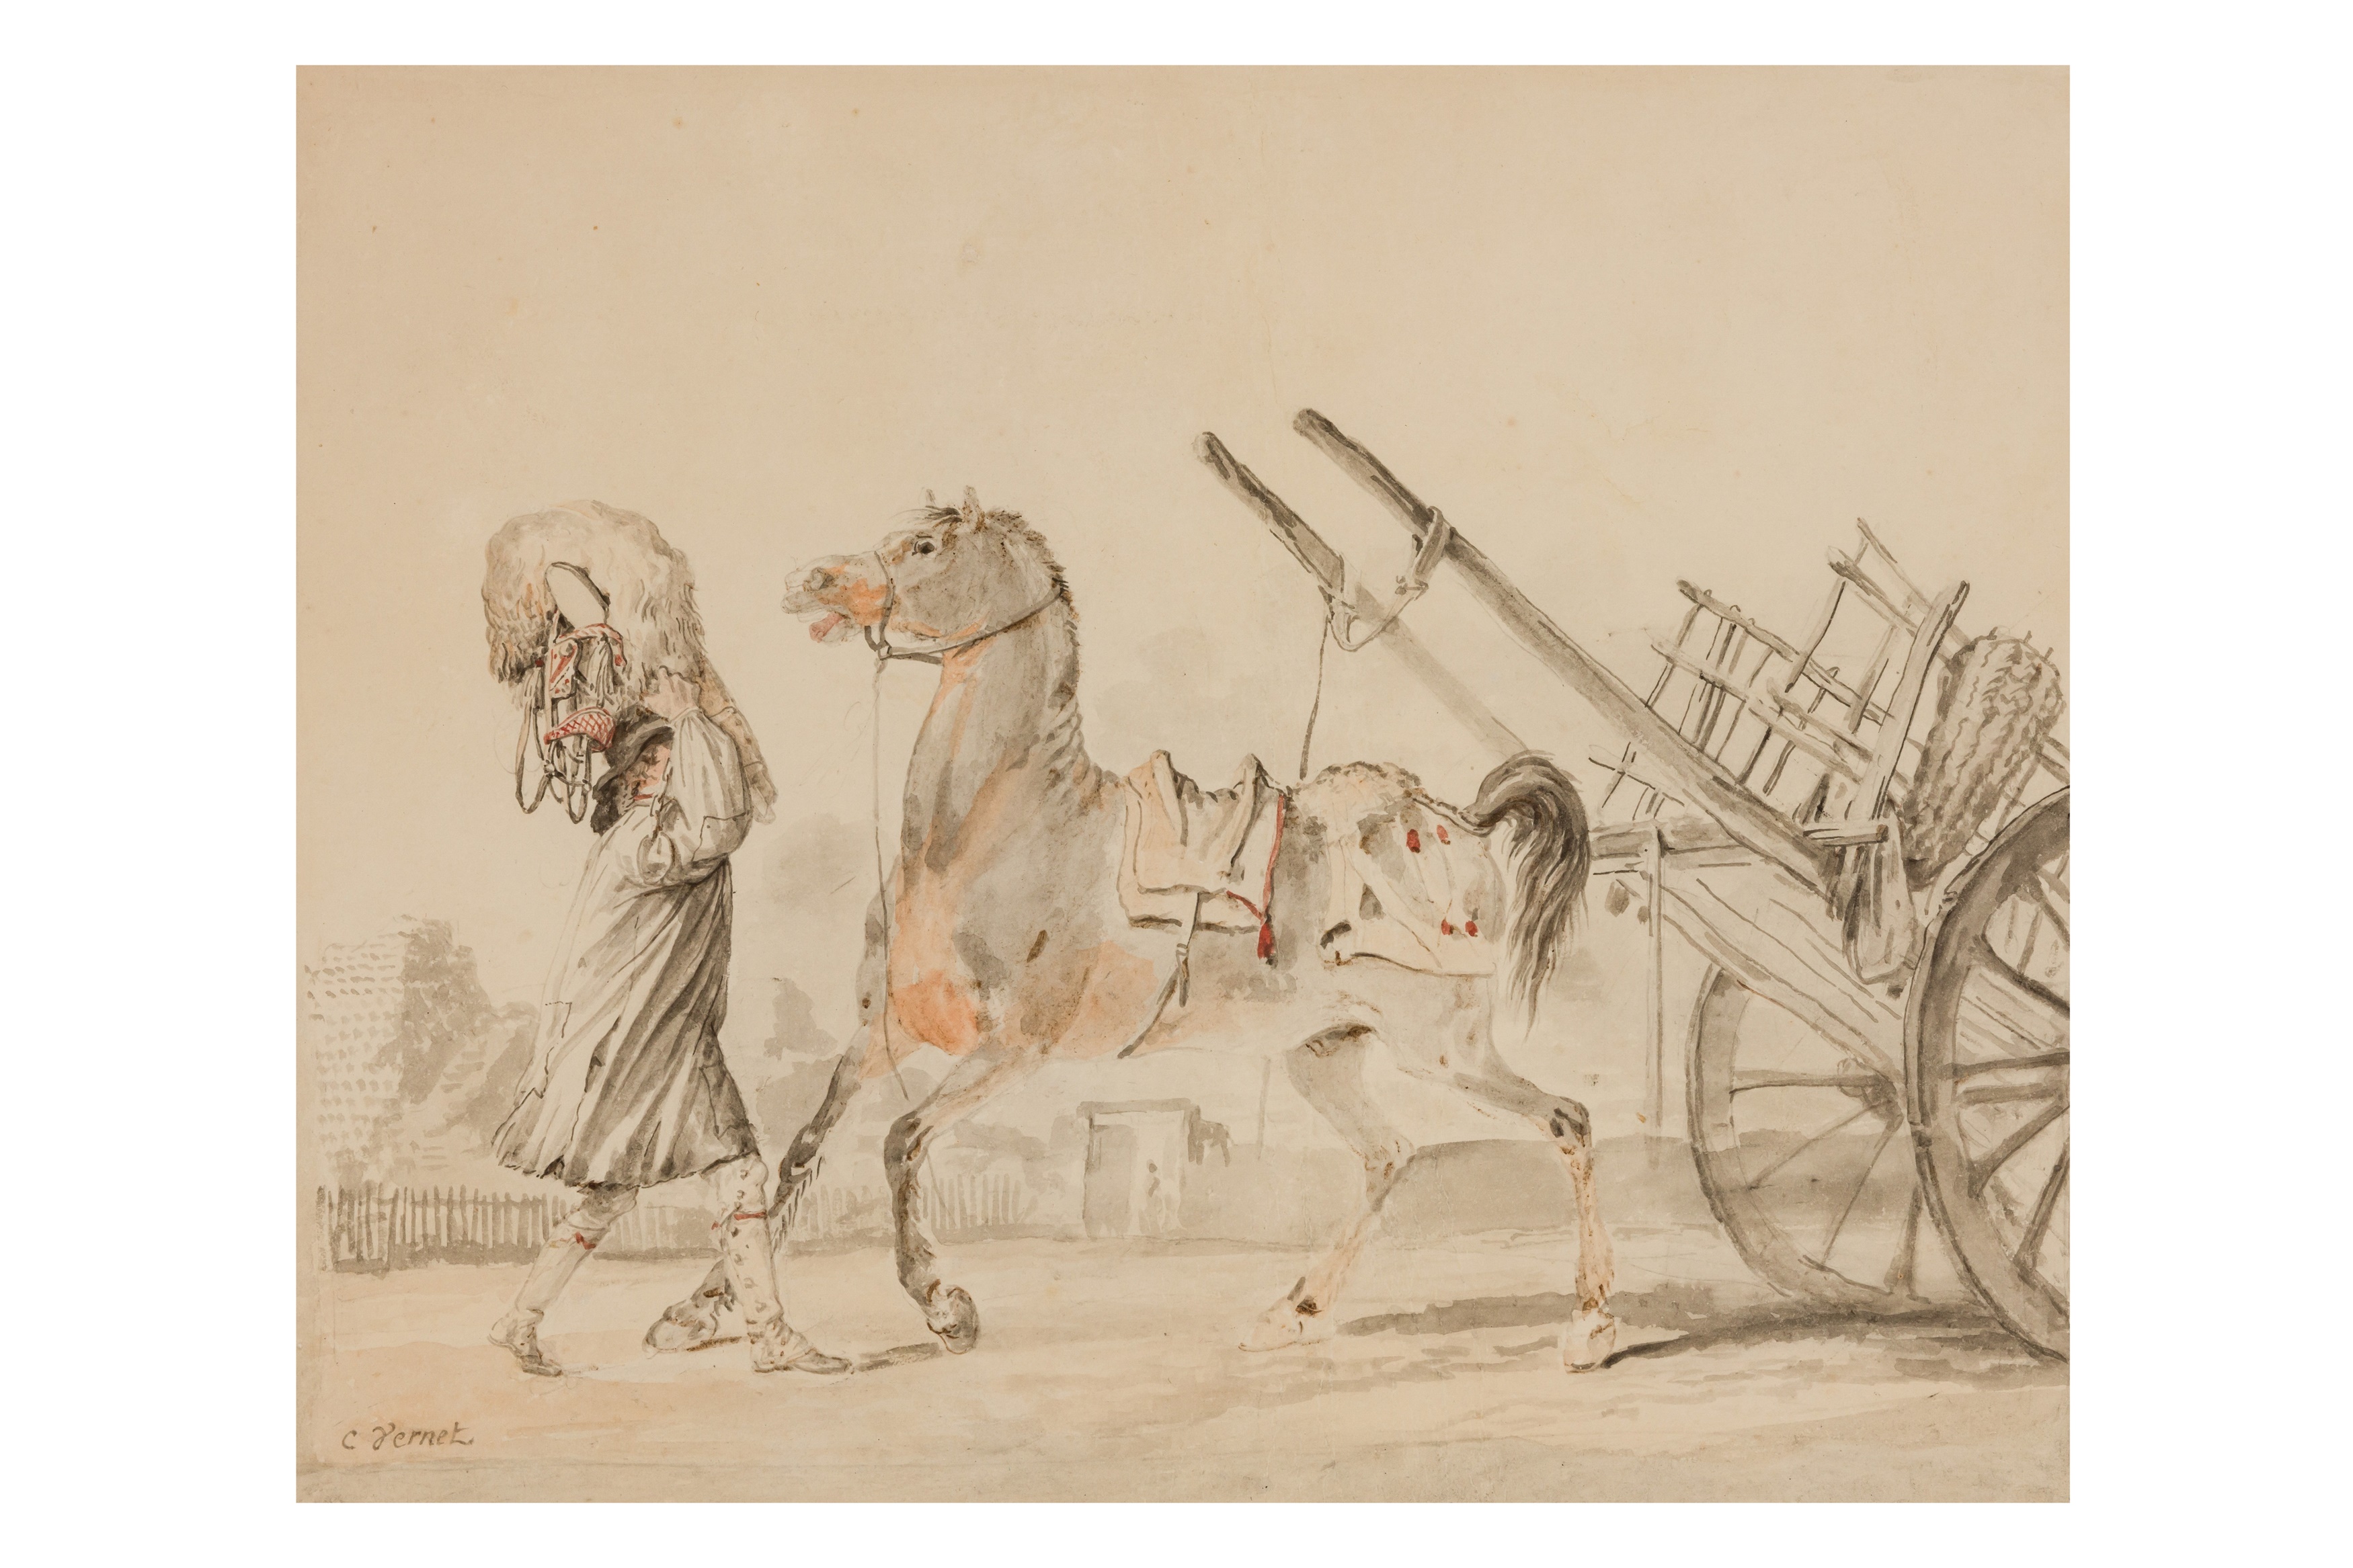 ANTOINE-CHARLES-HORACE VERNET, CALLED CARLE VERNET (BORDEAUX 1758-1836 PARIS)